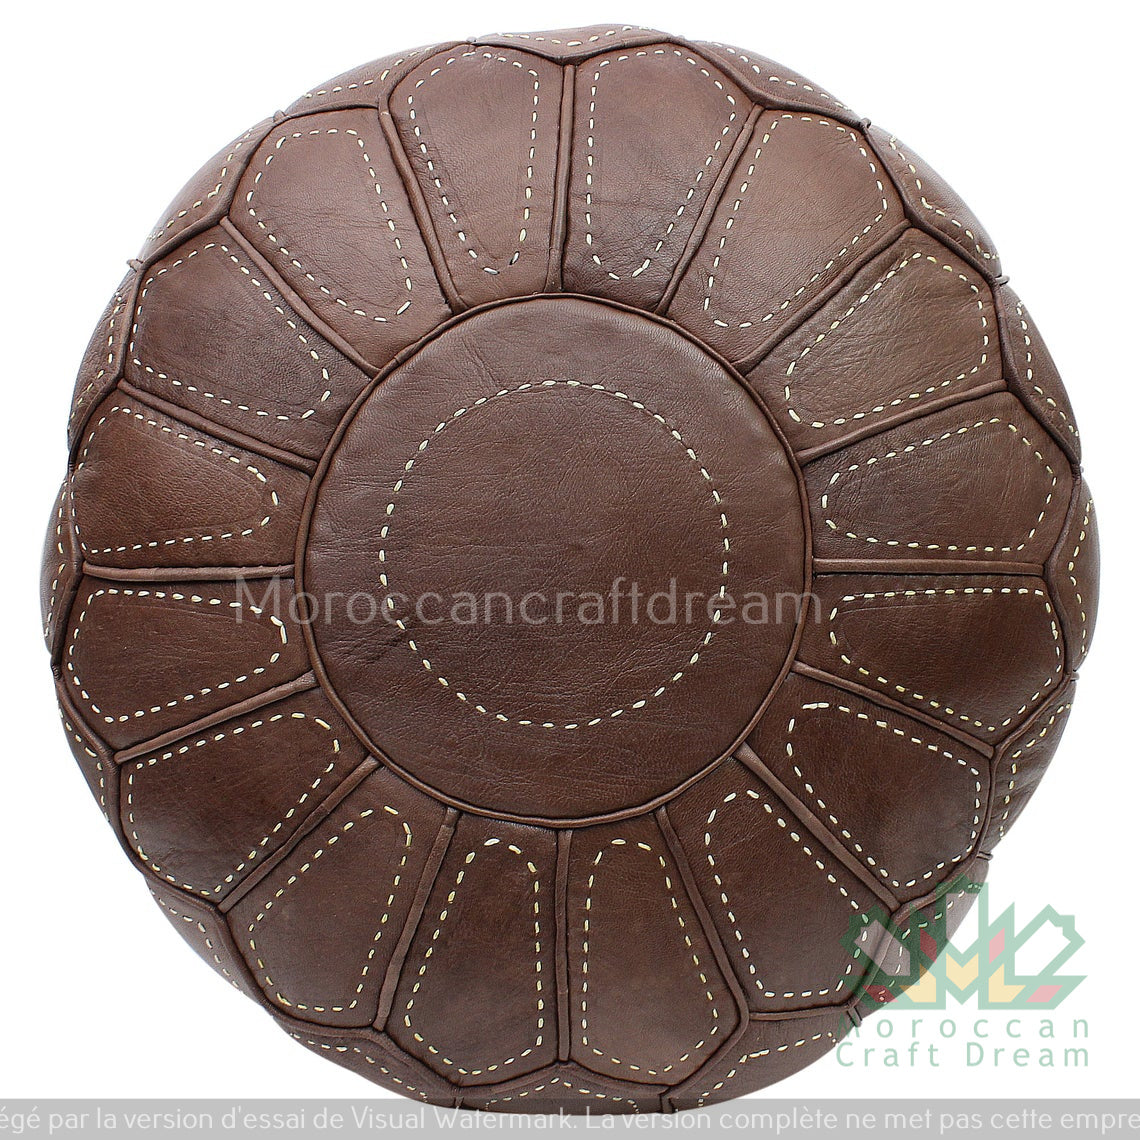 Luxury Leather Ottoman Chocolate Without Star Stitching MRP5CH